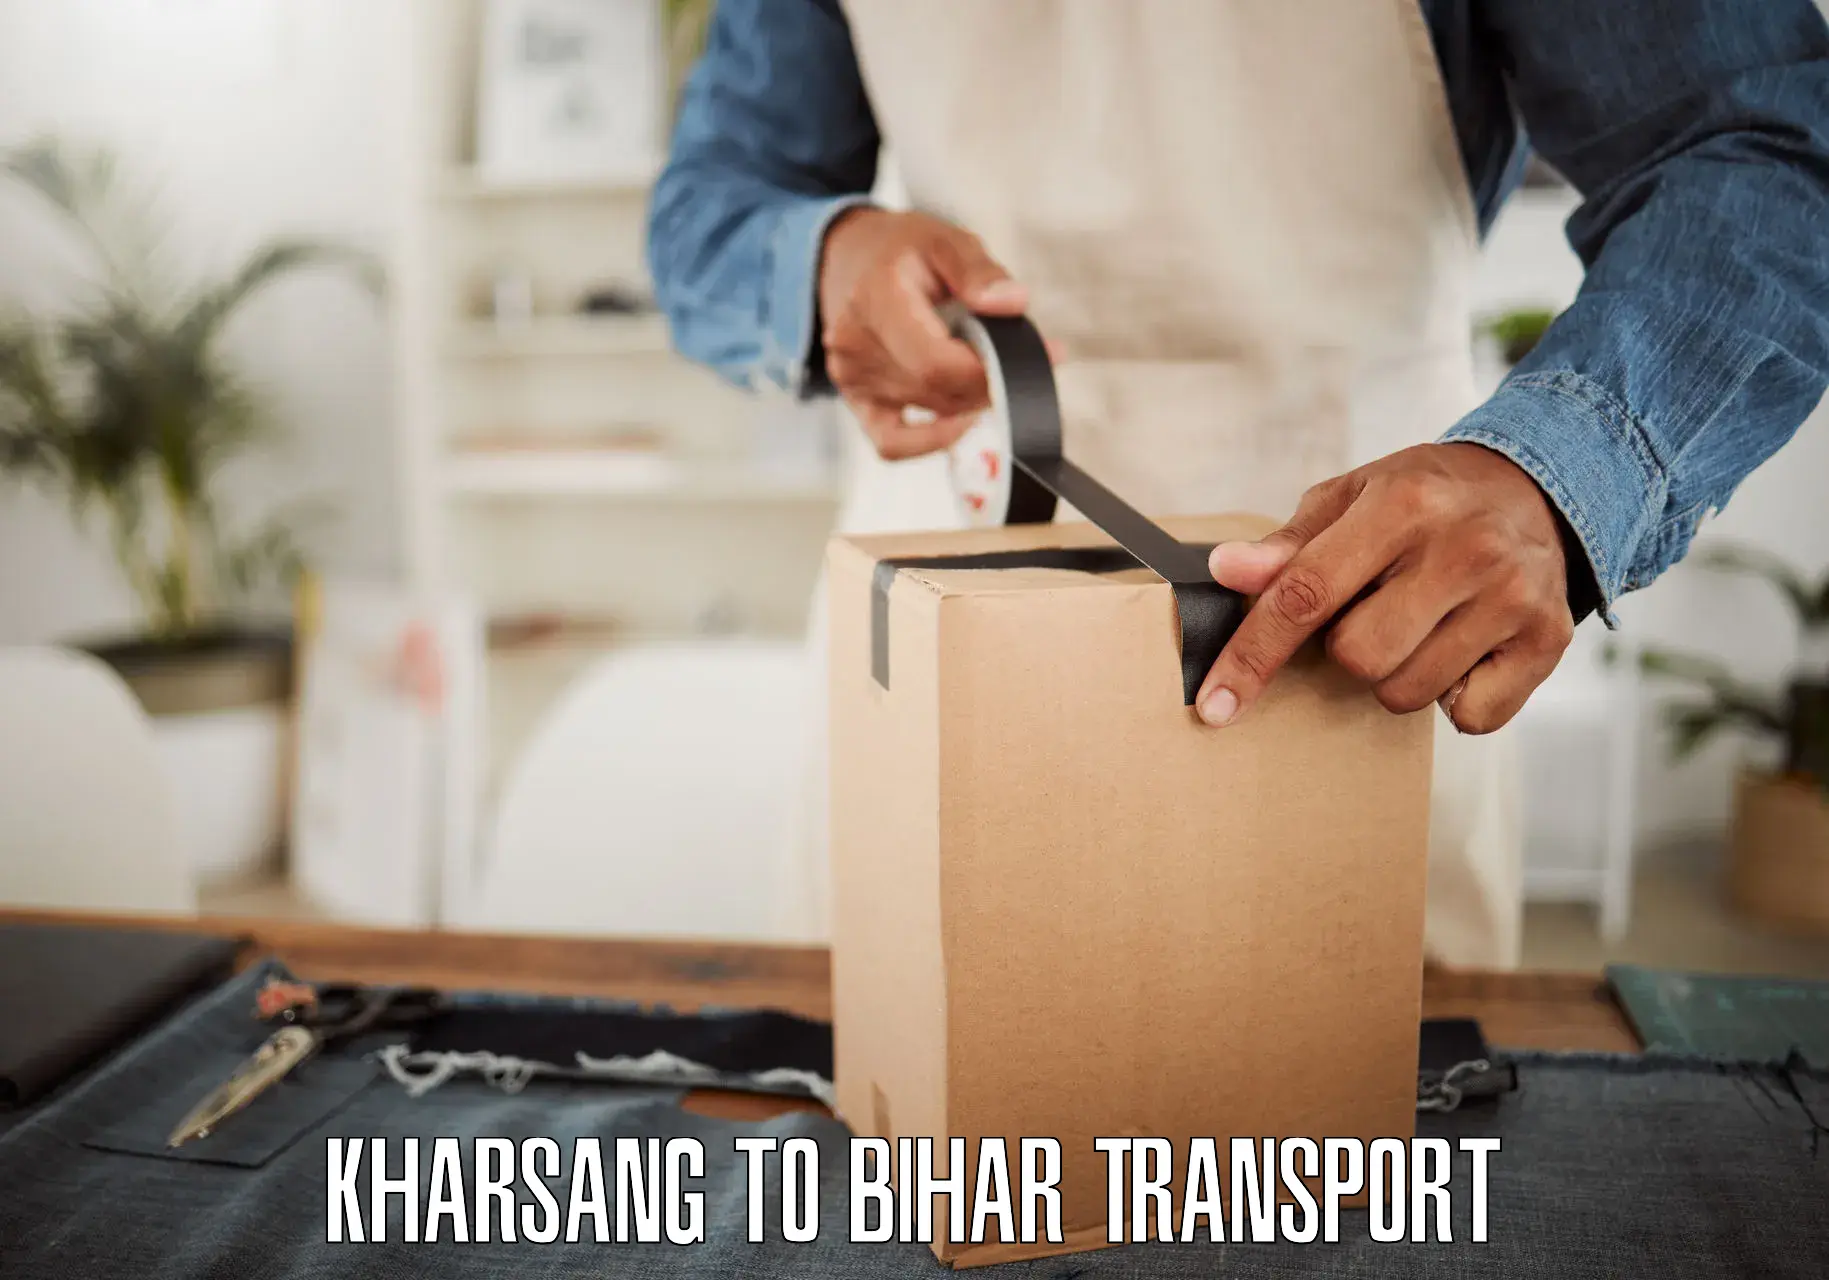 Transport in sharing Kharsang to Bhorey